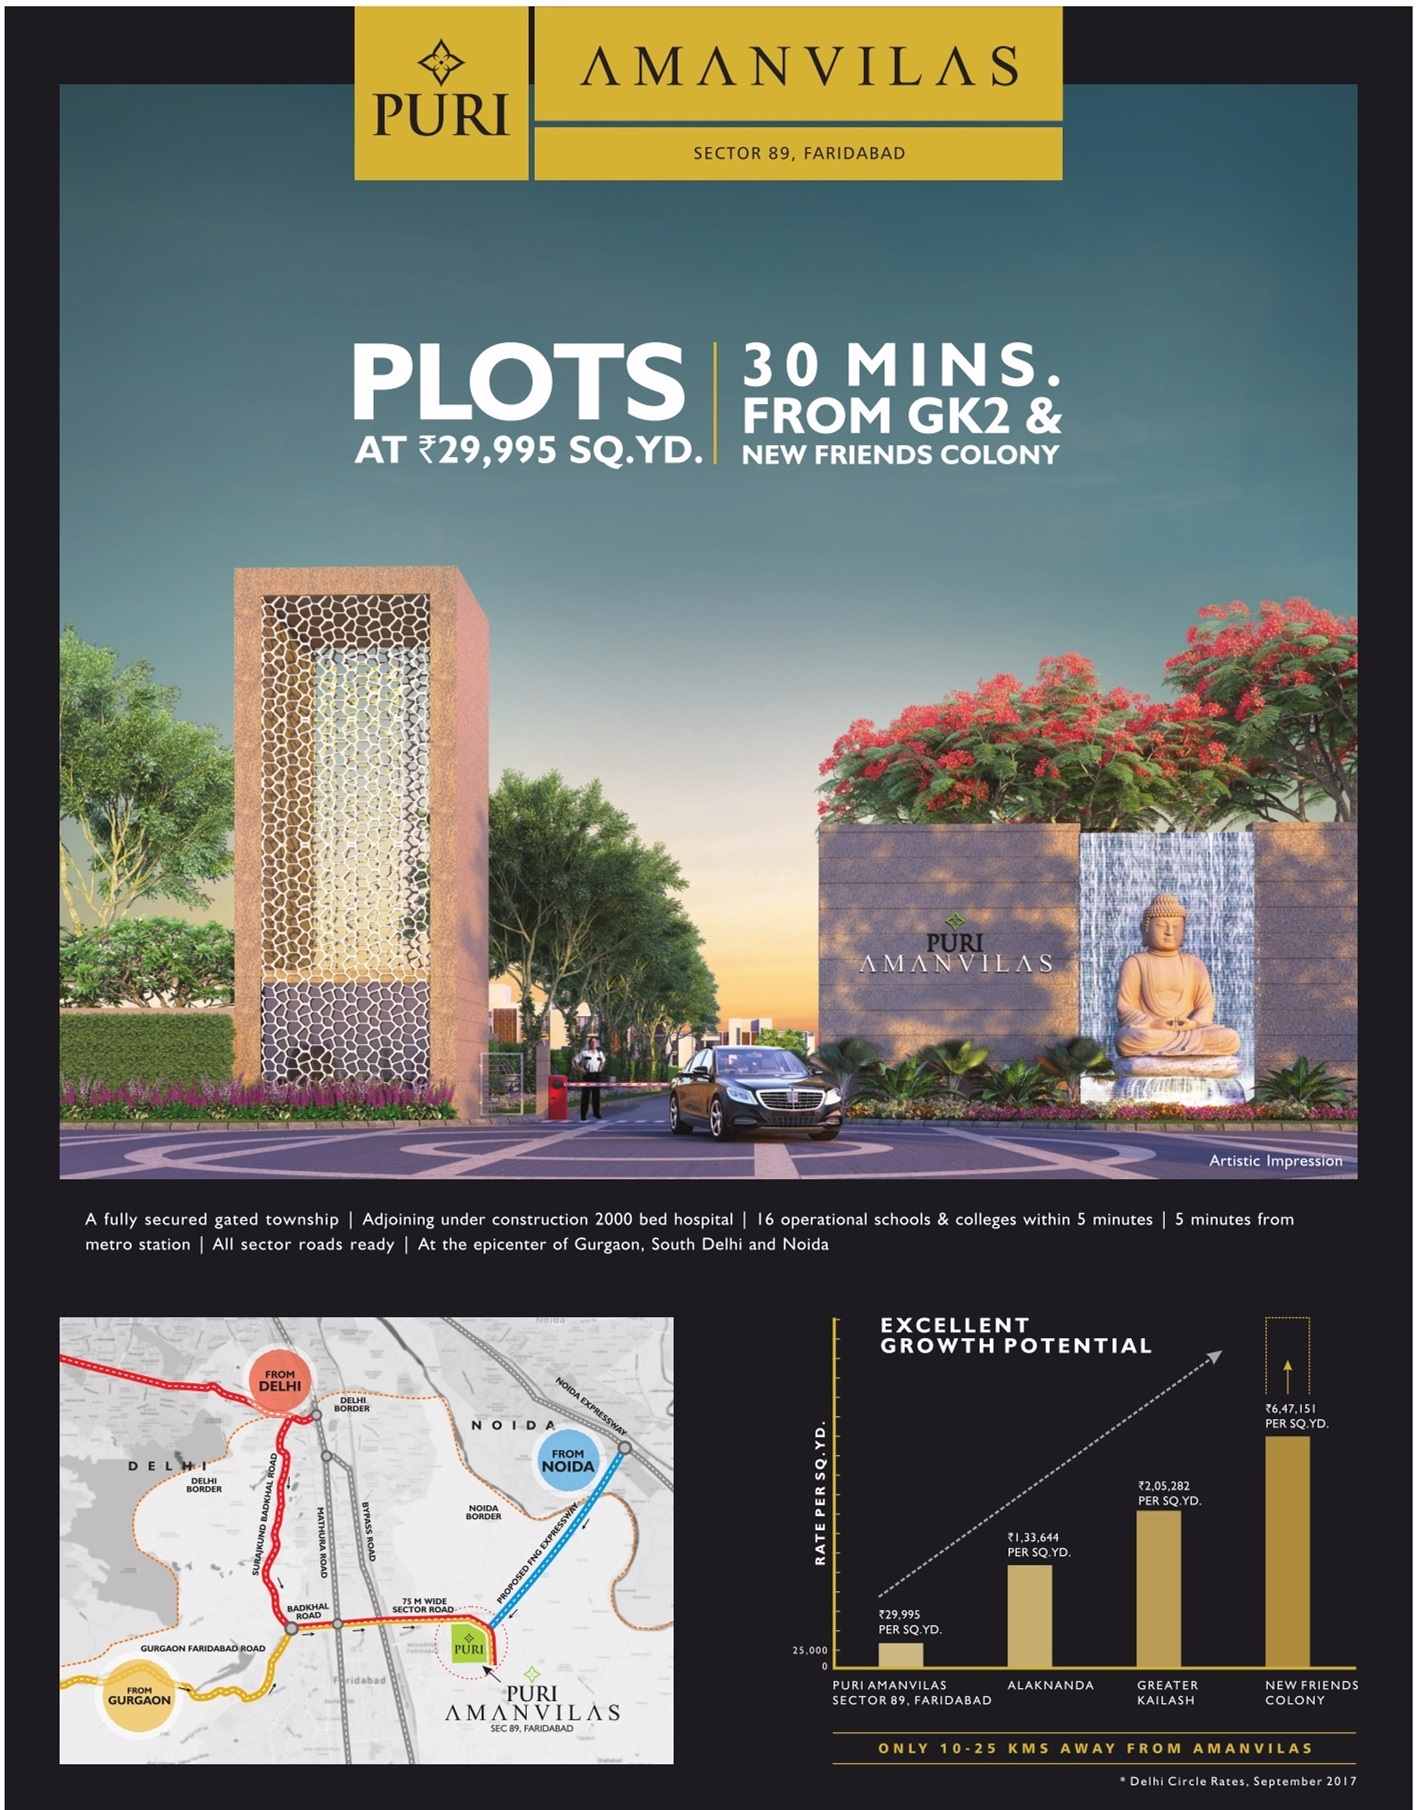 Puri Amanvilas presents residential plots @ 29,995 sq. yd. in Faridabad